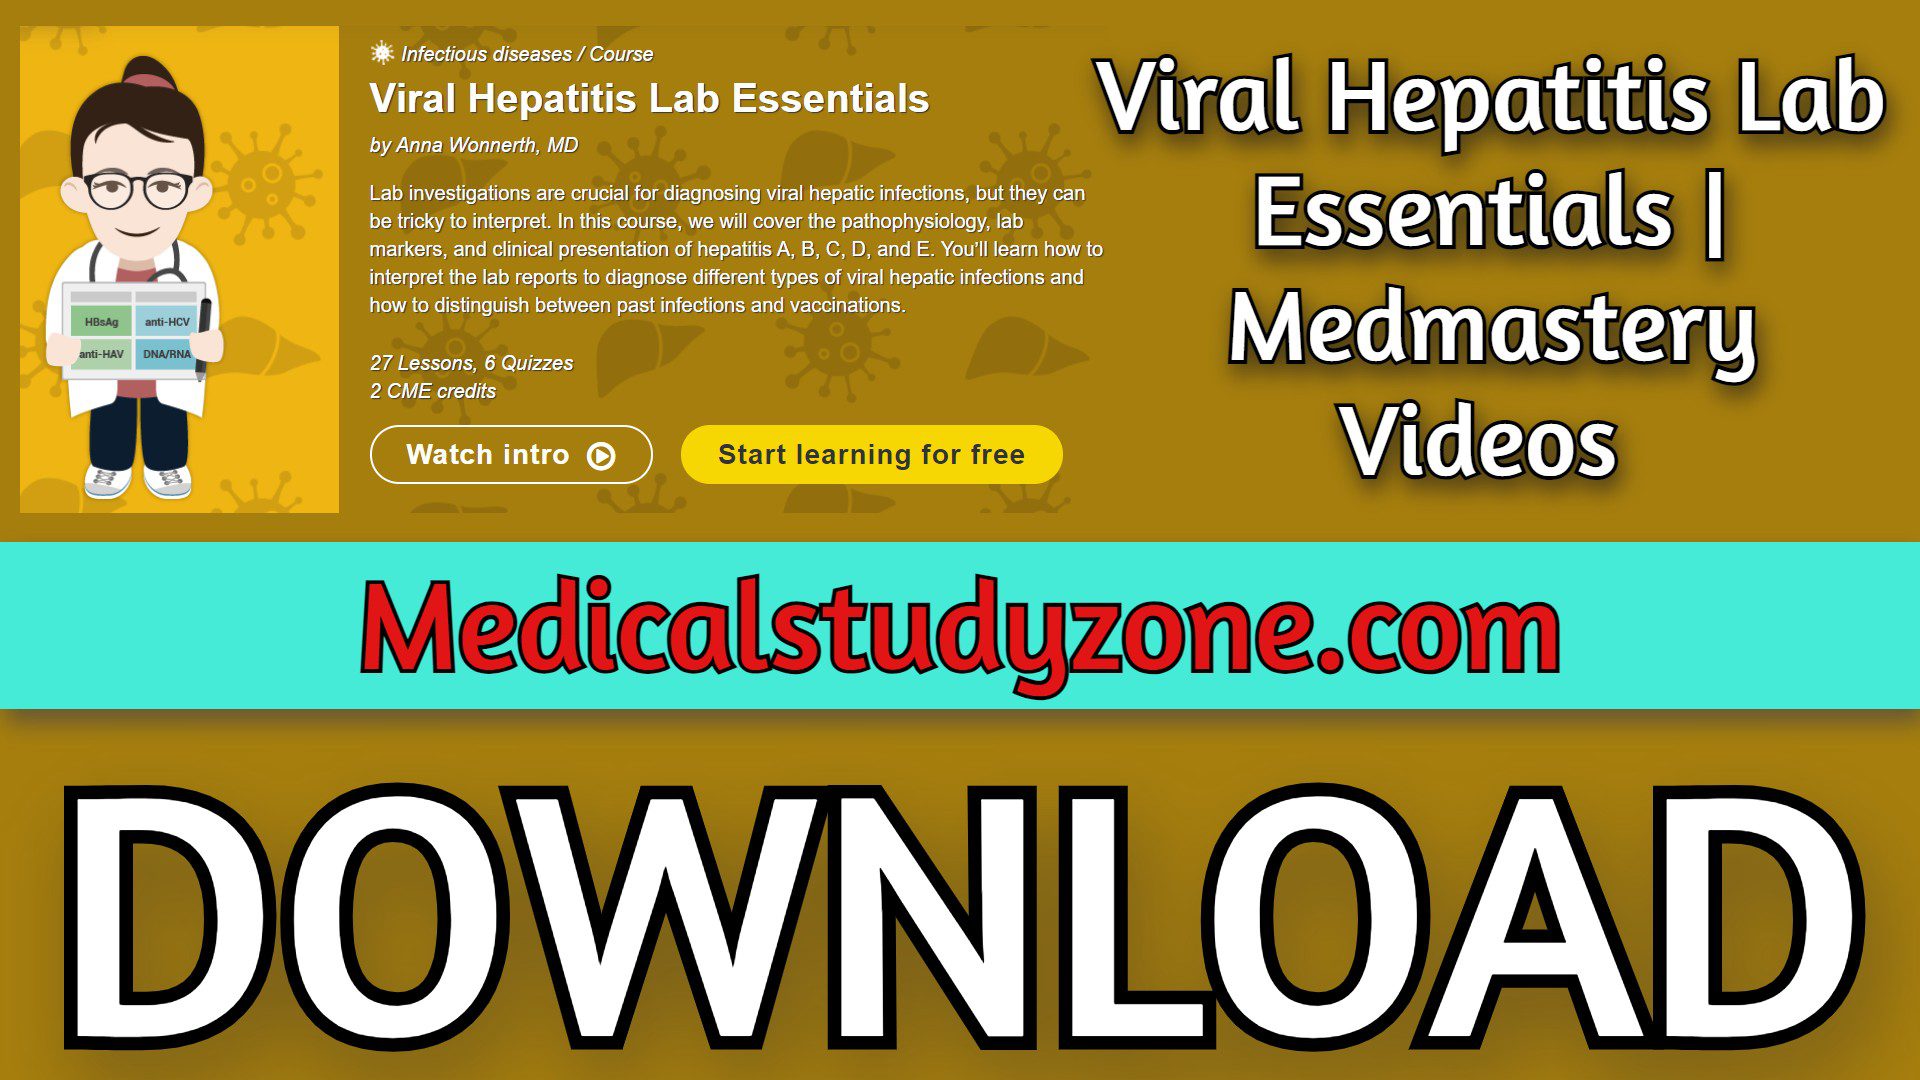 Viral Hepatitis Lab Essentials | Medmastery 2023 Videos Free Download